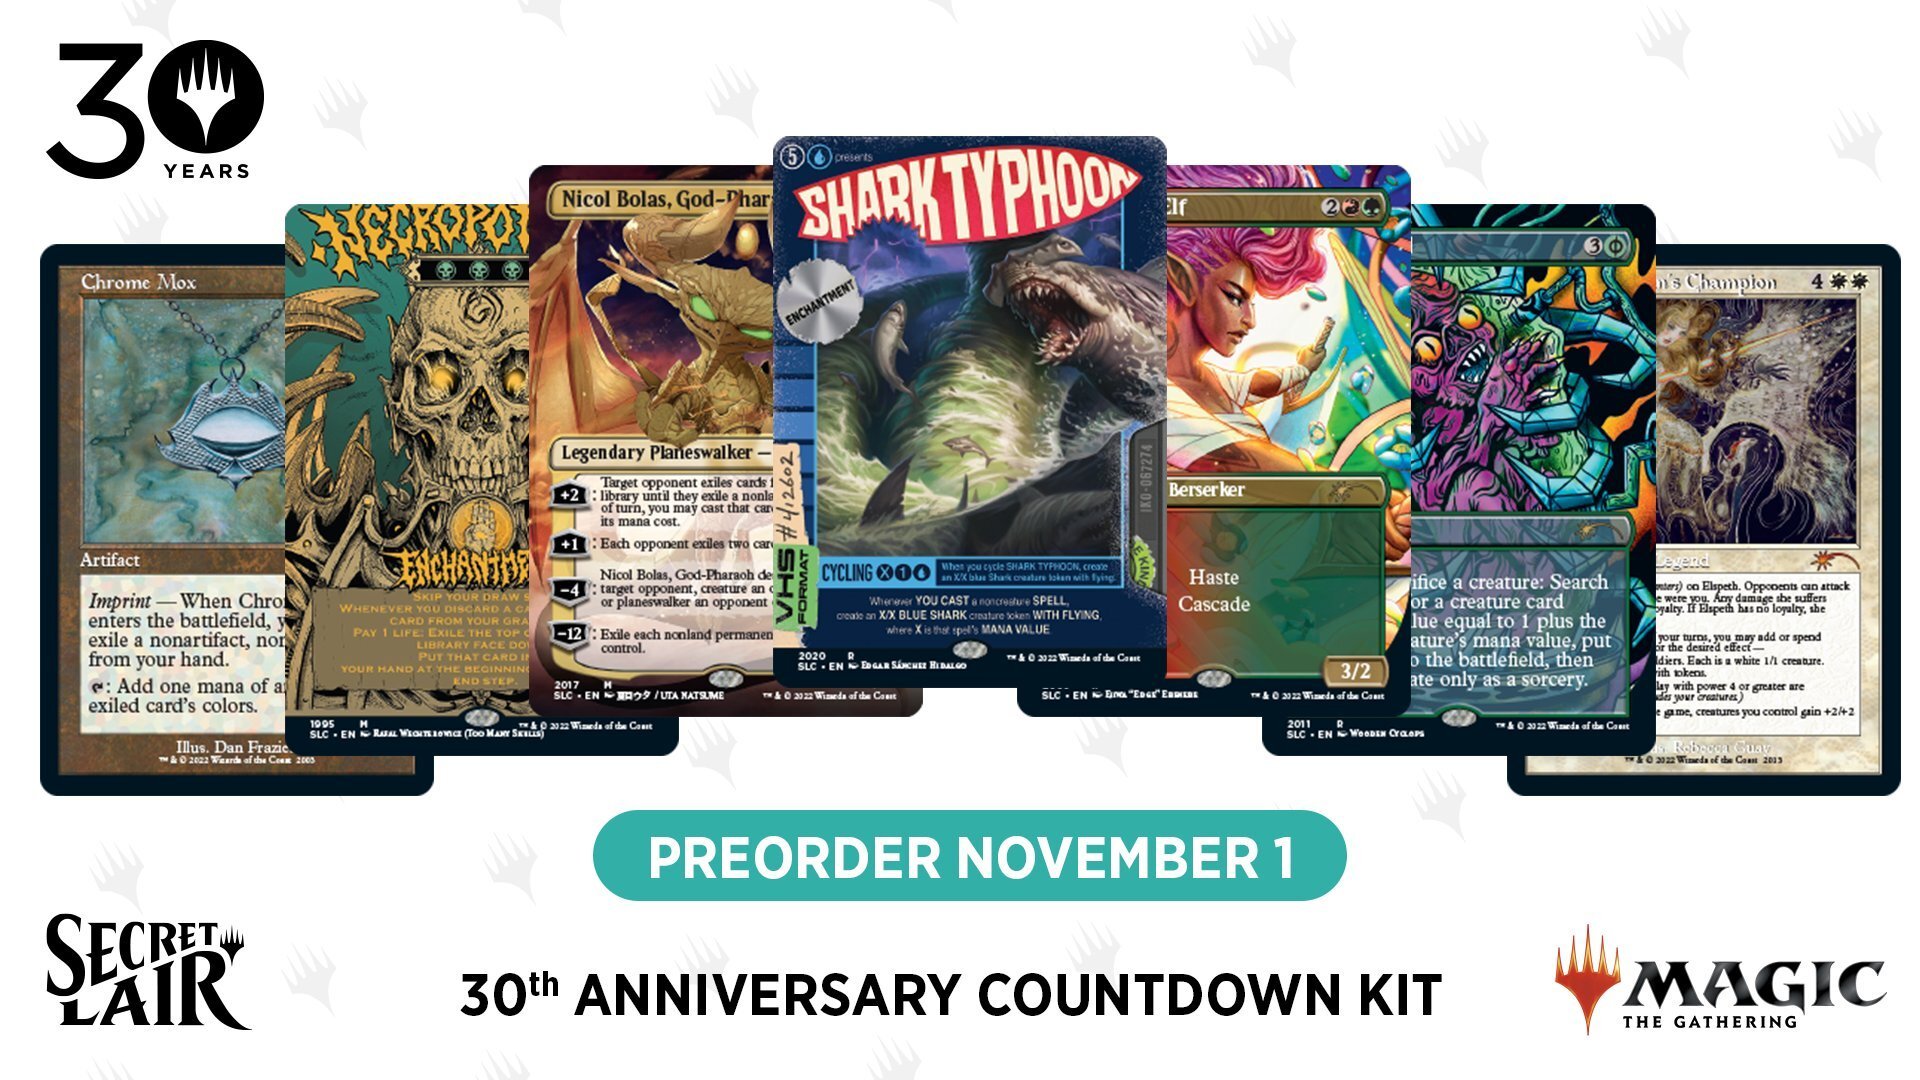 Secret Lair 30th Anniversary Countdown Kit Full Card List Revealed